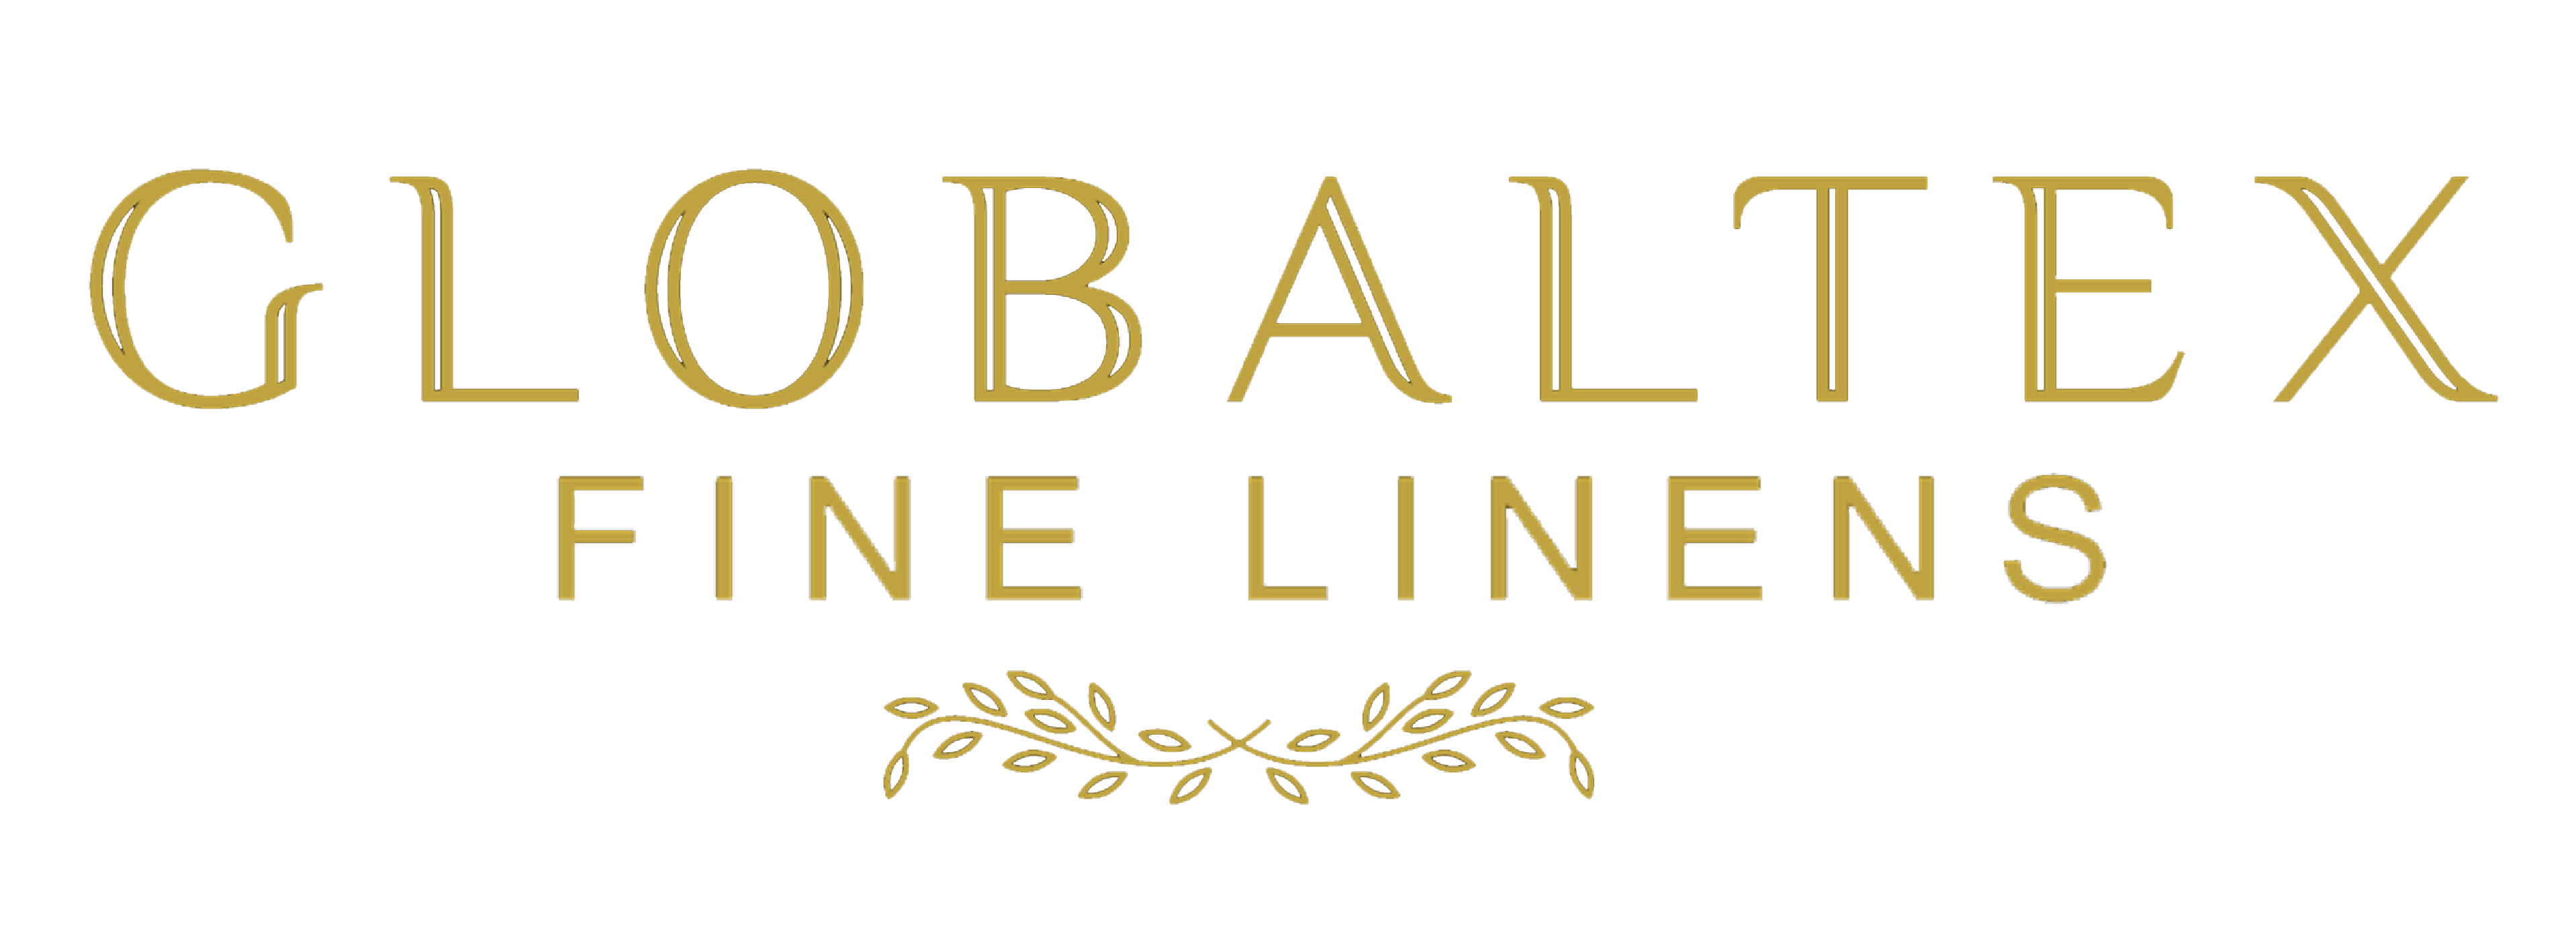 Globaltex Fine Linens